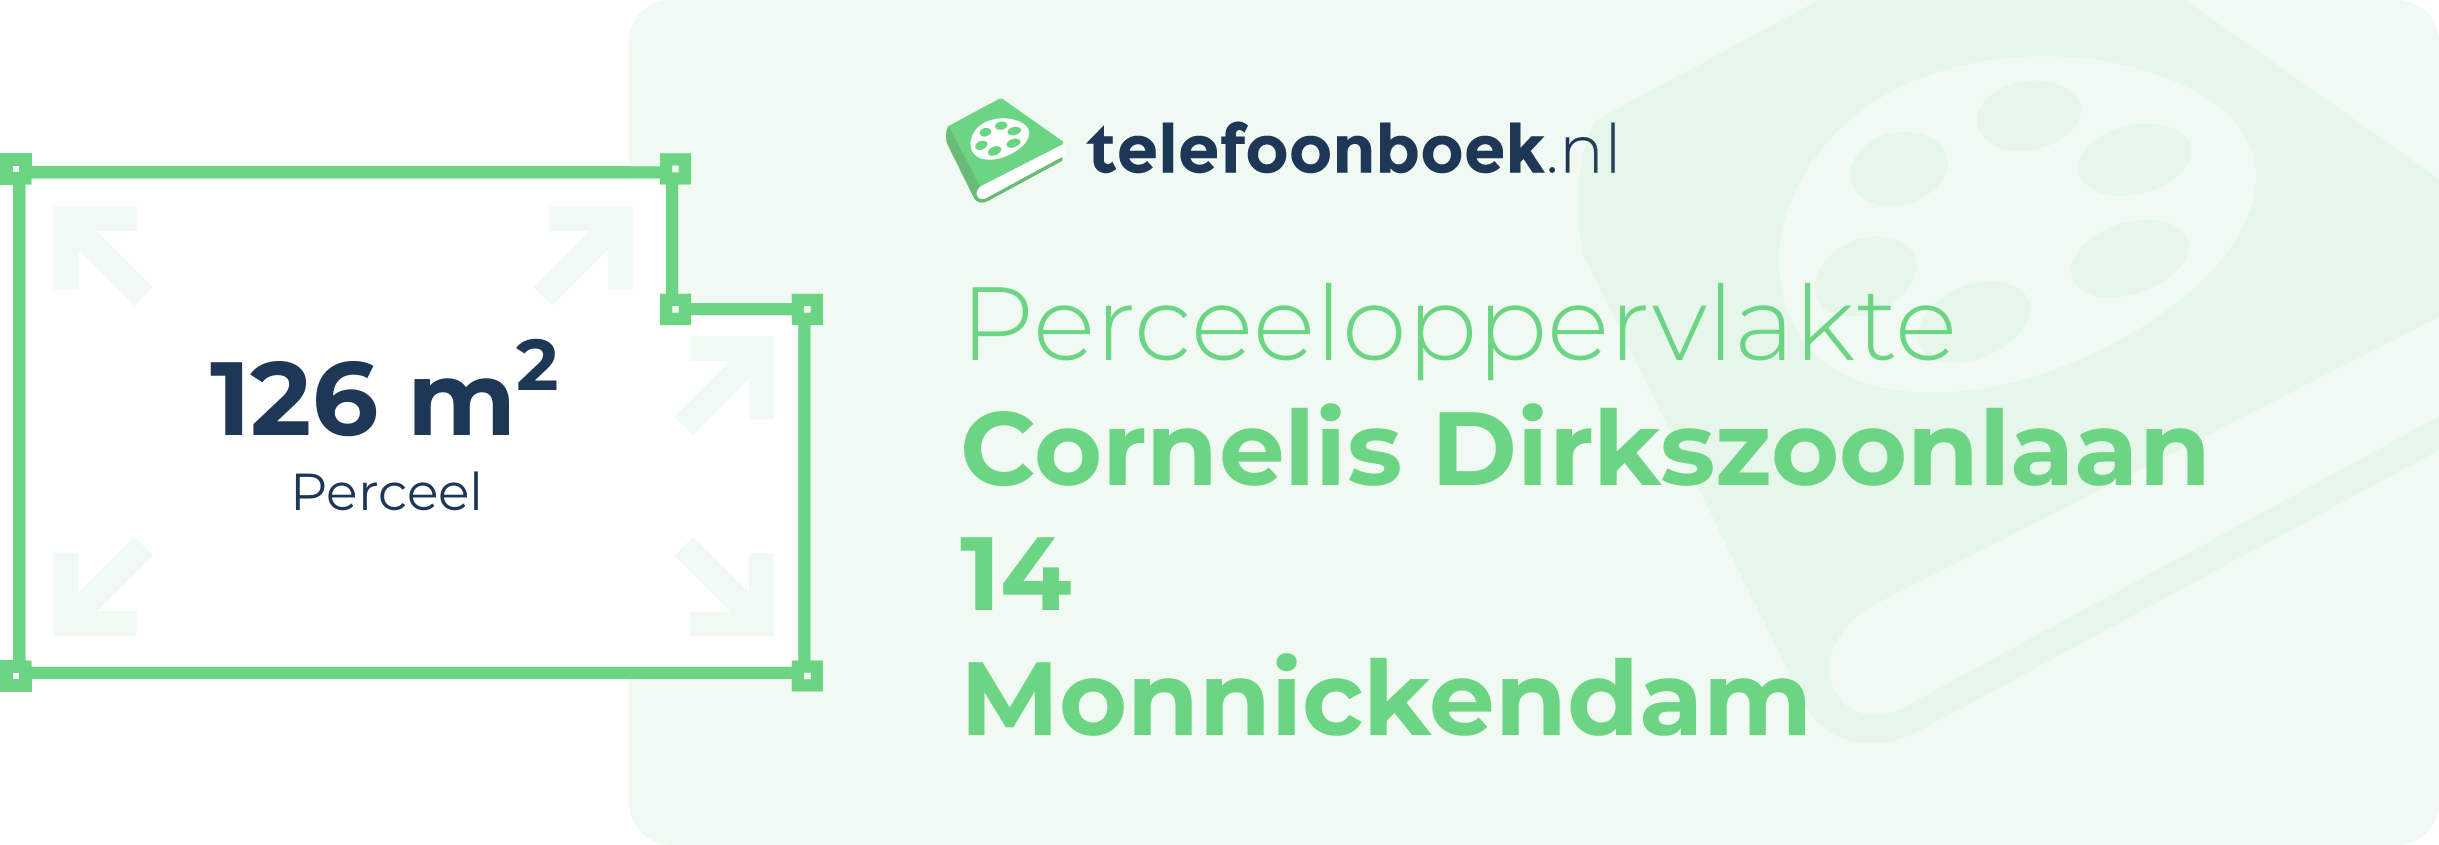 Perceeloppervlakte Cornelis Dirkszoonlaan 14 Monnickendam